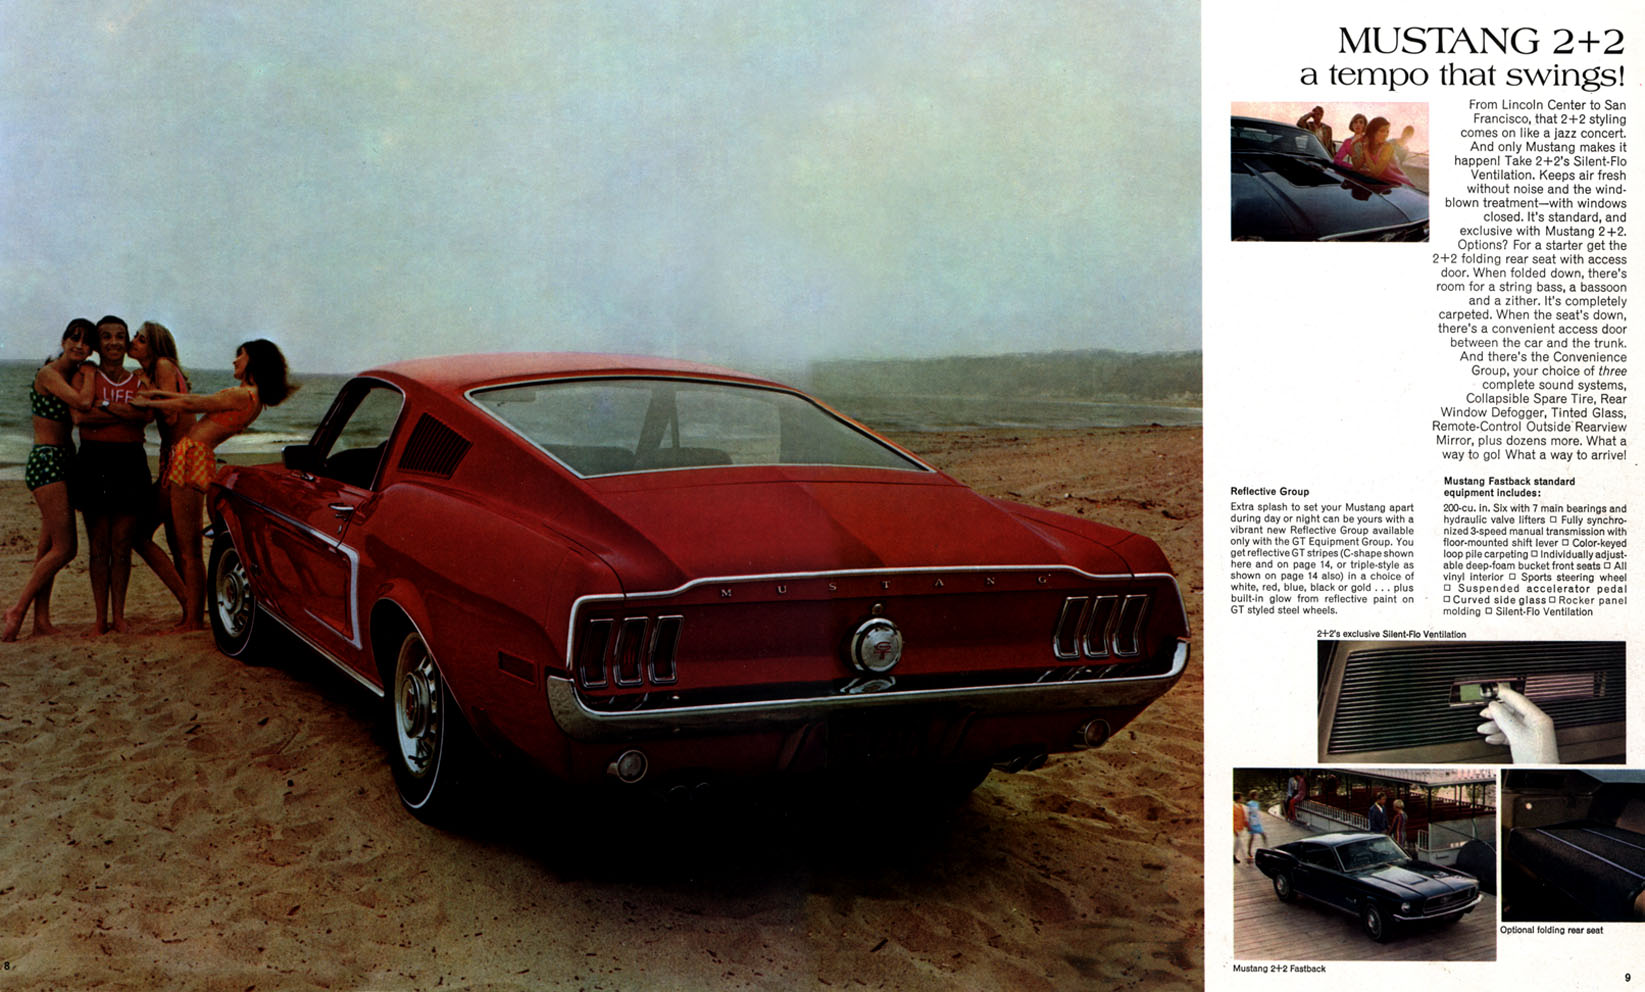 1968 Mustang Prospekt Page 8-9